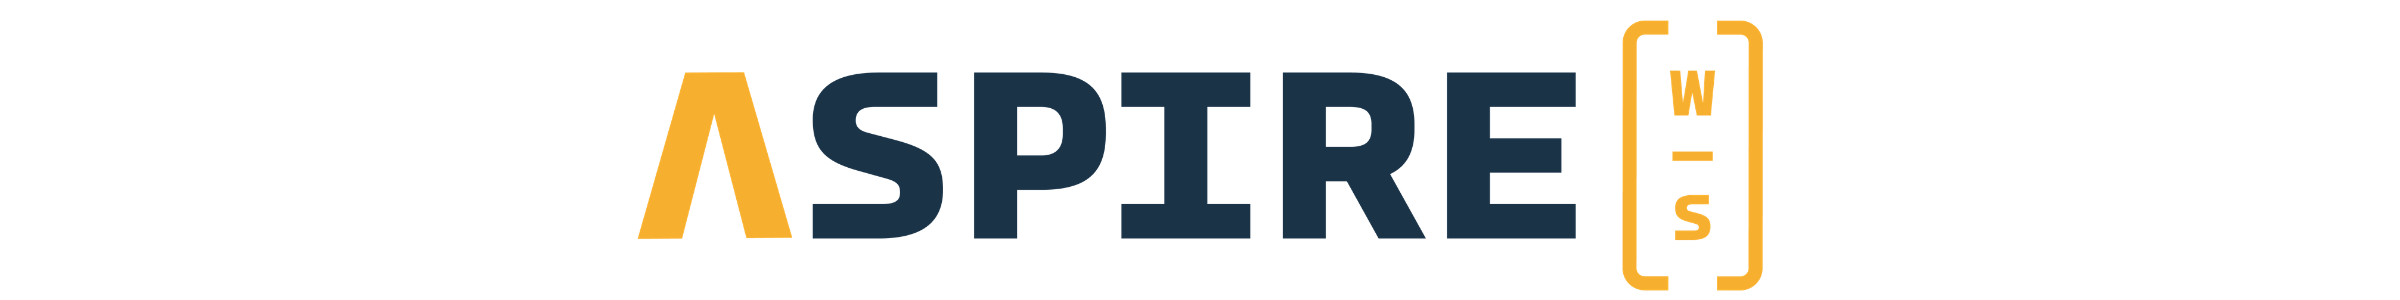 AspireWS Logo Header 2